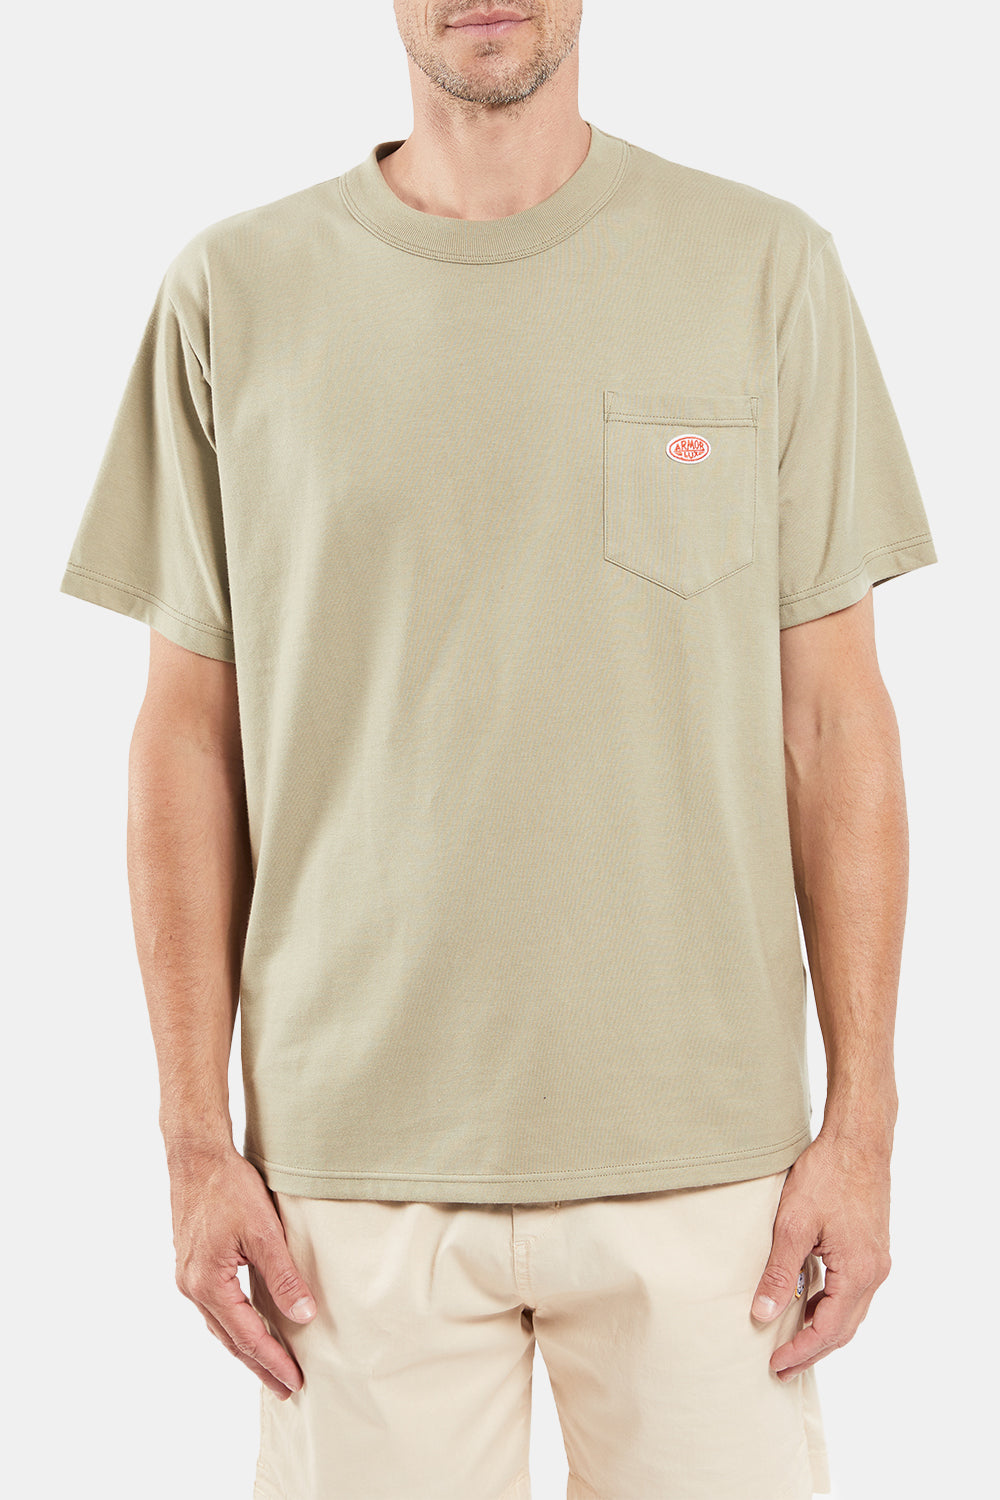 Armor Lux Heritage Organic Pocket T-Shirt (Argile) | Number Six